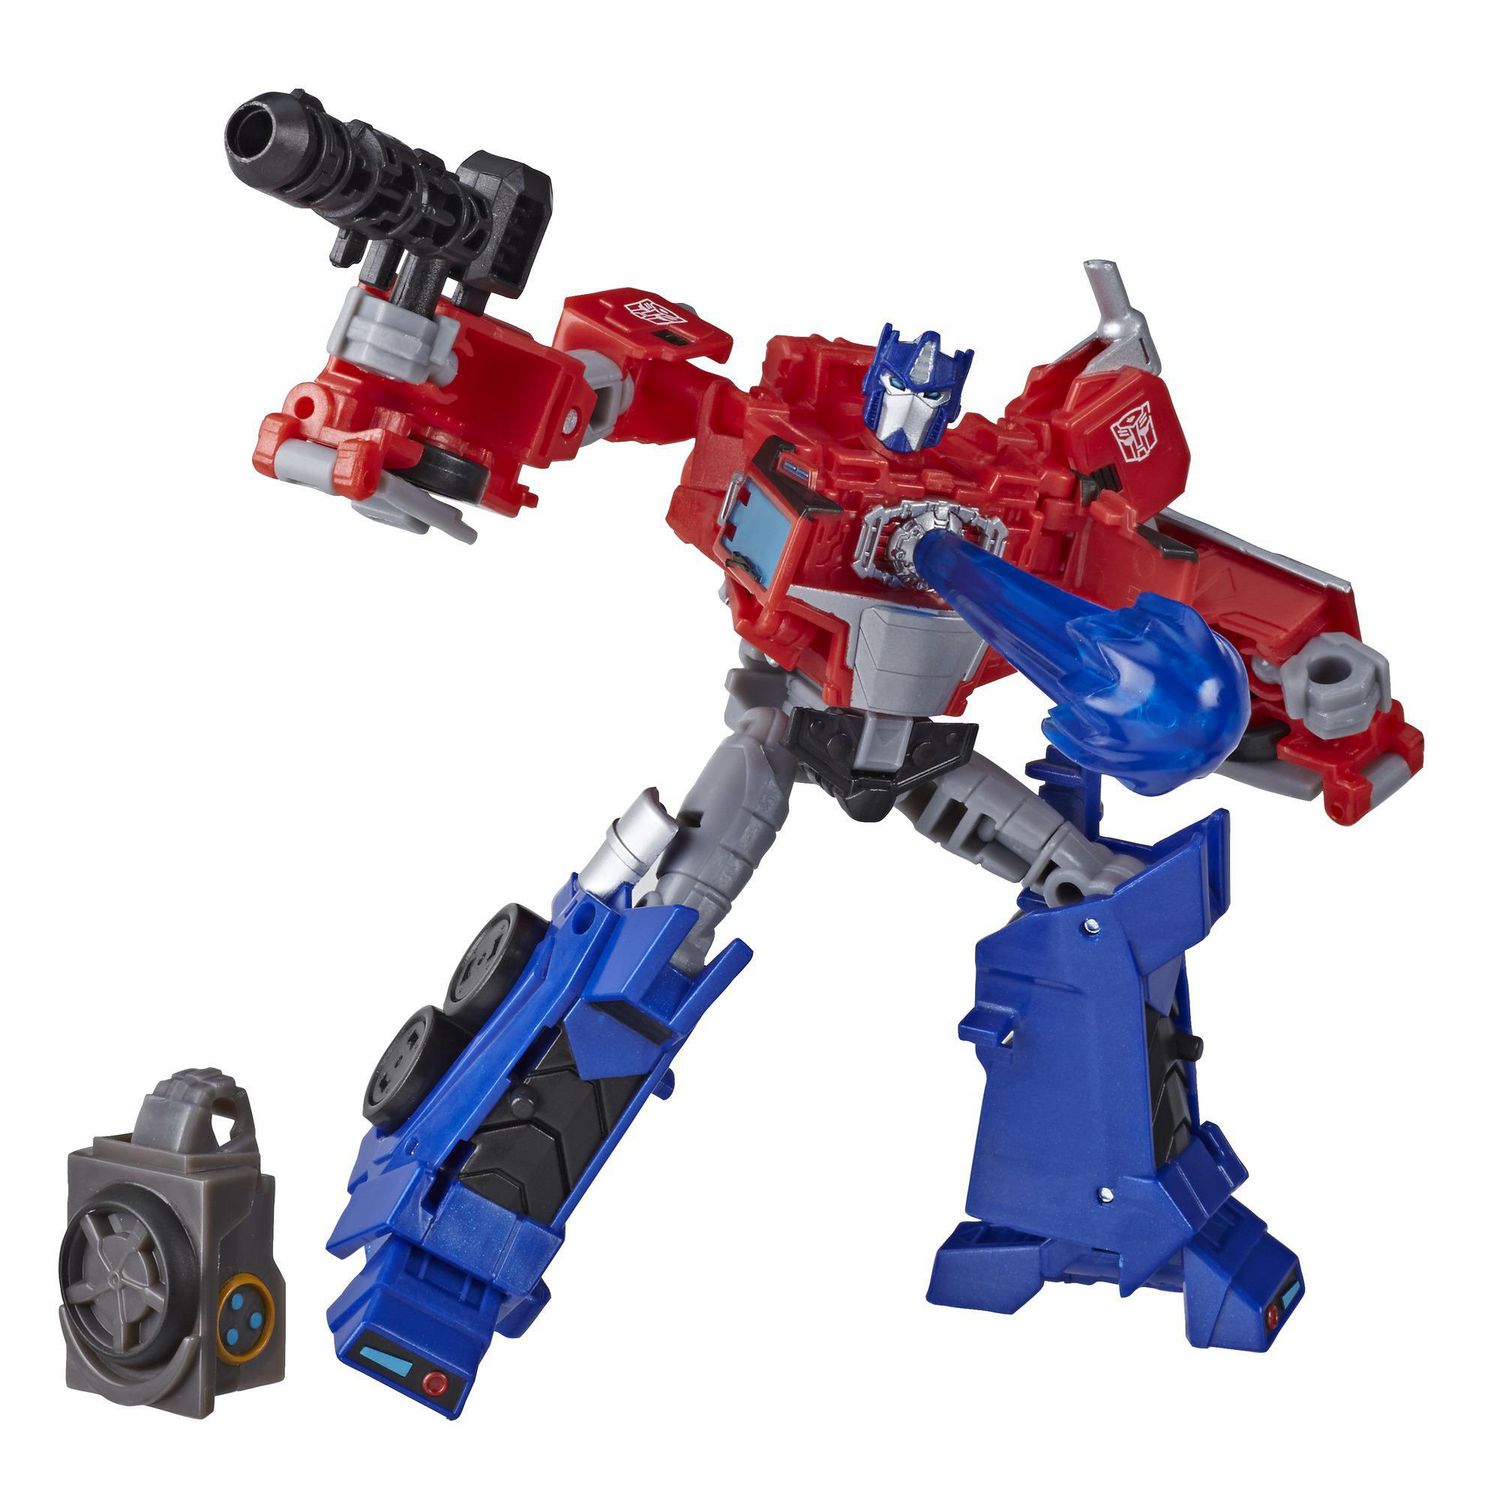 transformers optimus prime action figure